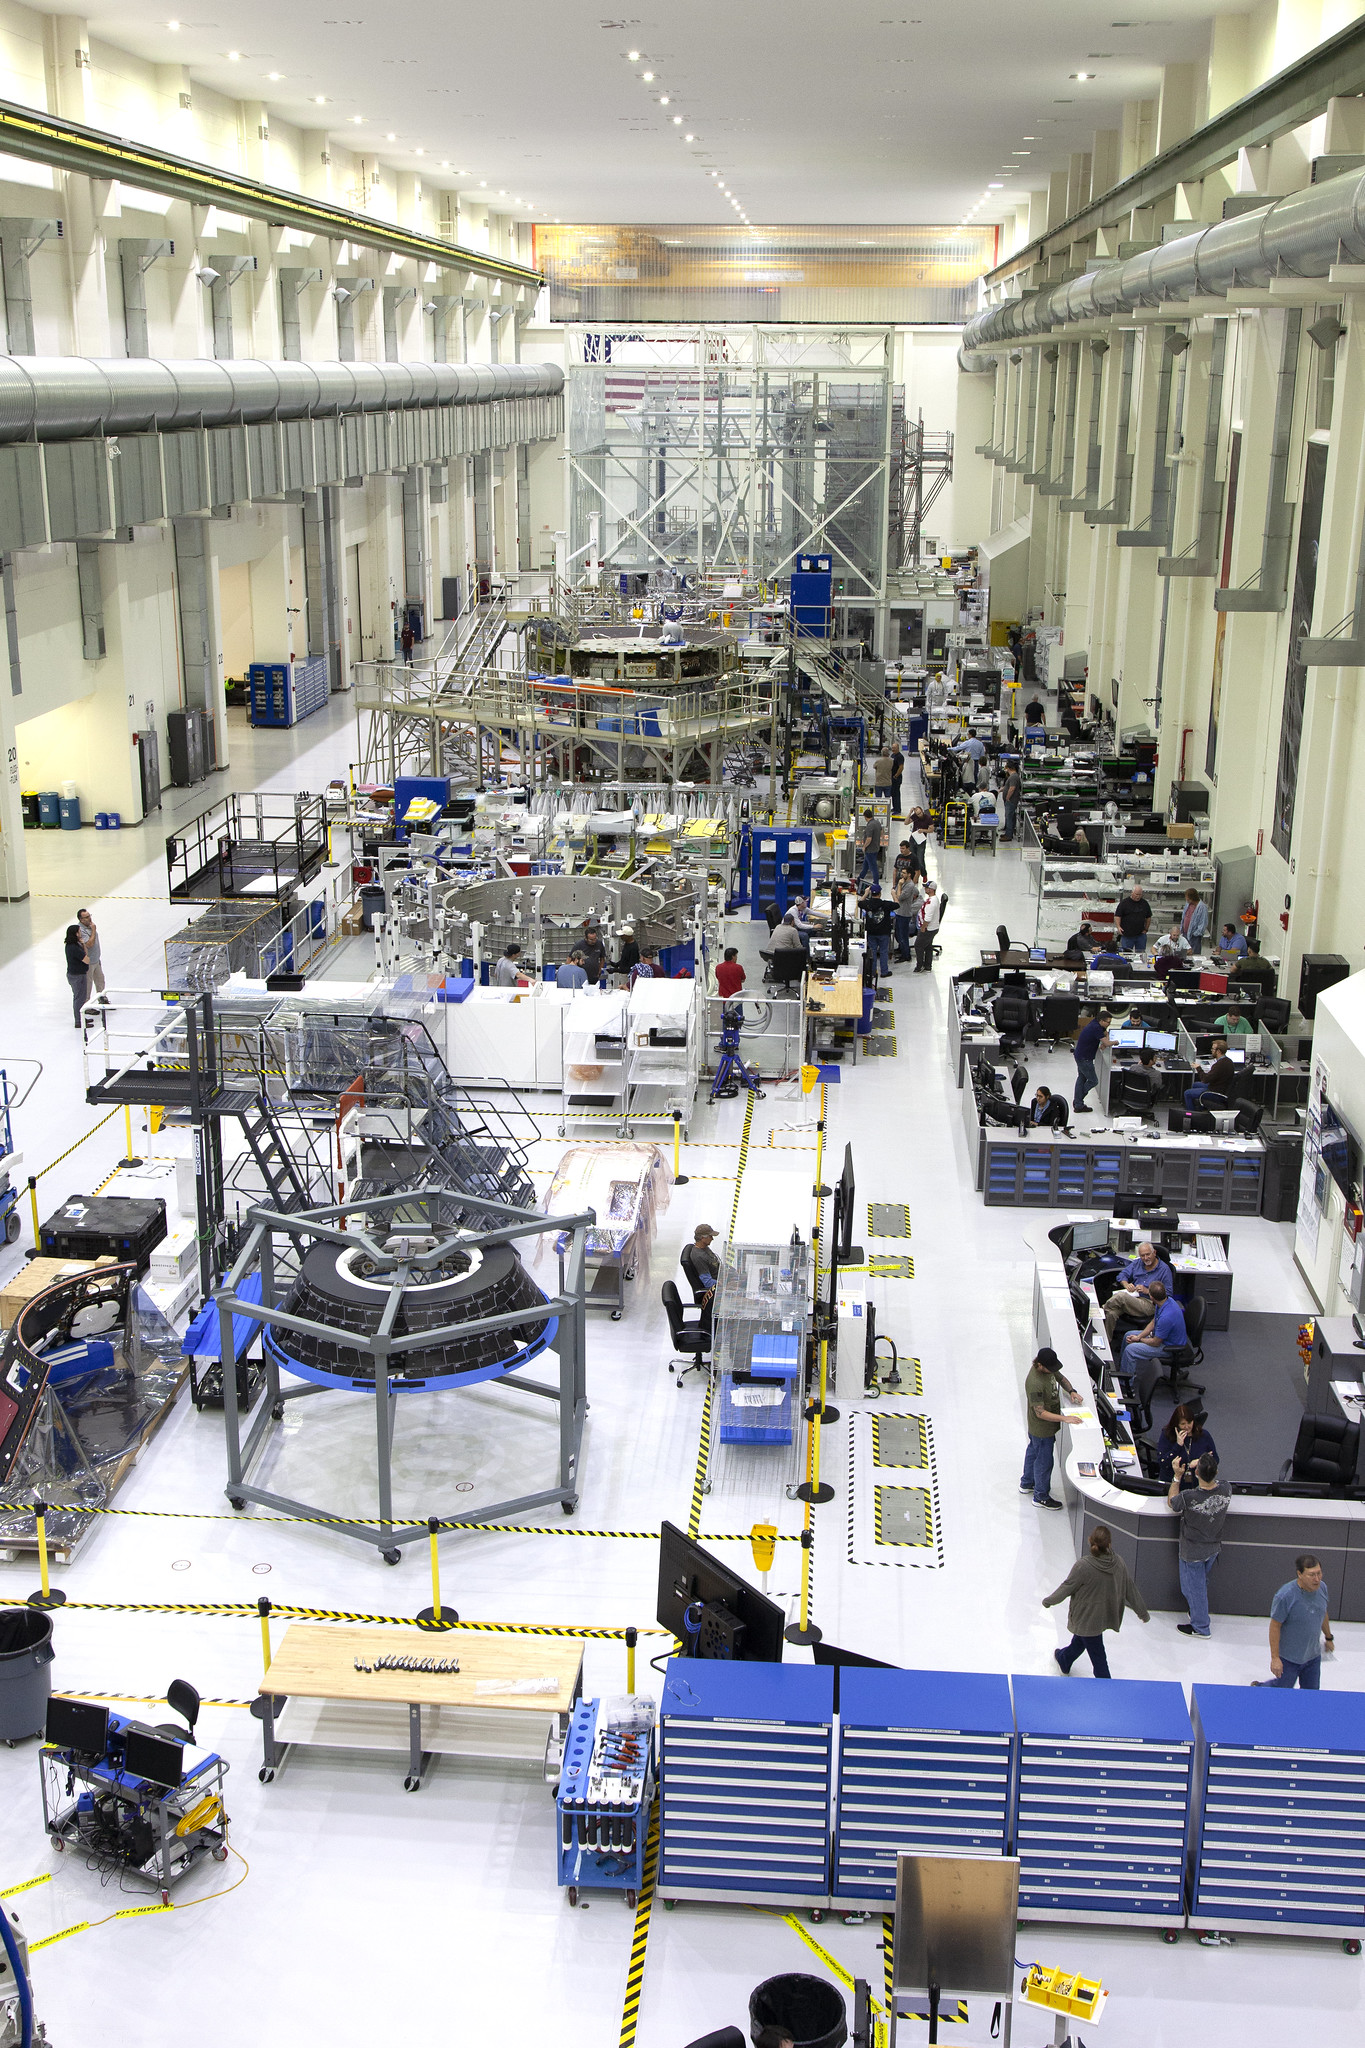 NASA’s Orion Spacecraft Factory in Florida